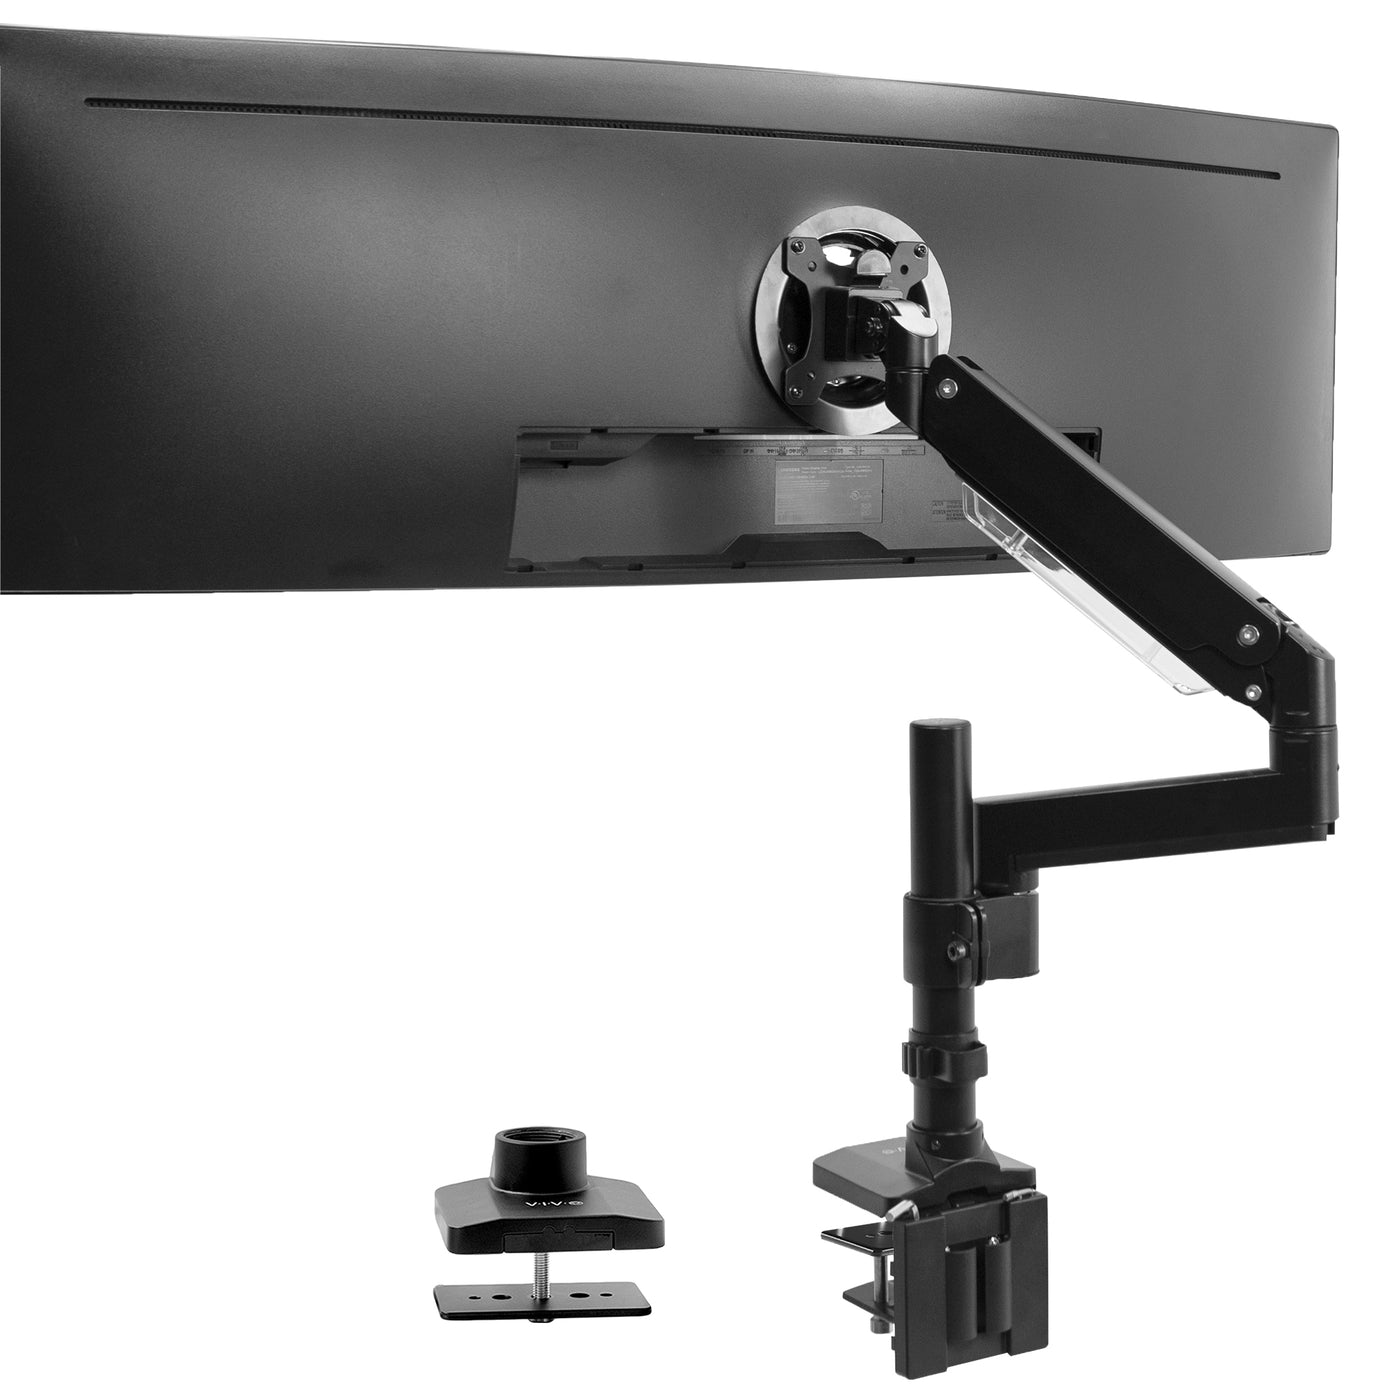 Sturdy adjustable pneumatic arm single ultrawide monitor ergonomic desk mount for office workstation.